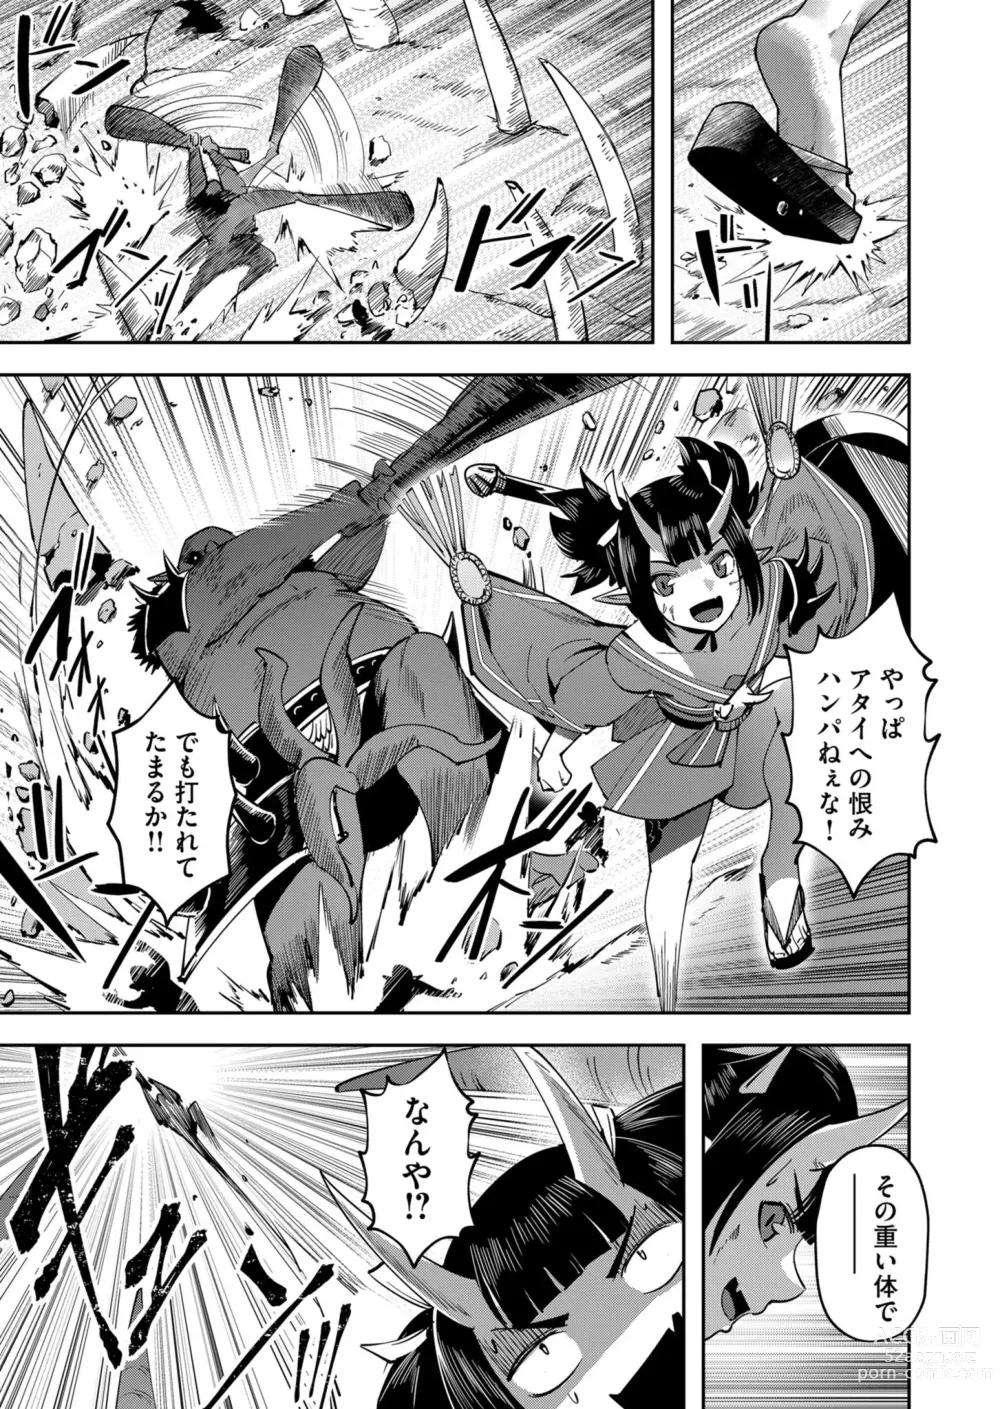 Page 151 of manga Kichiku Eiyuu Vol.03